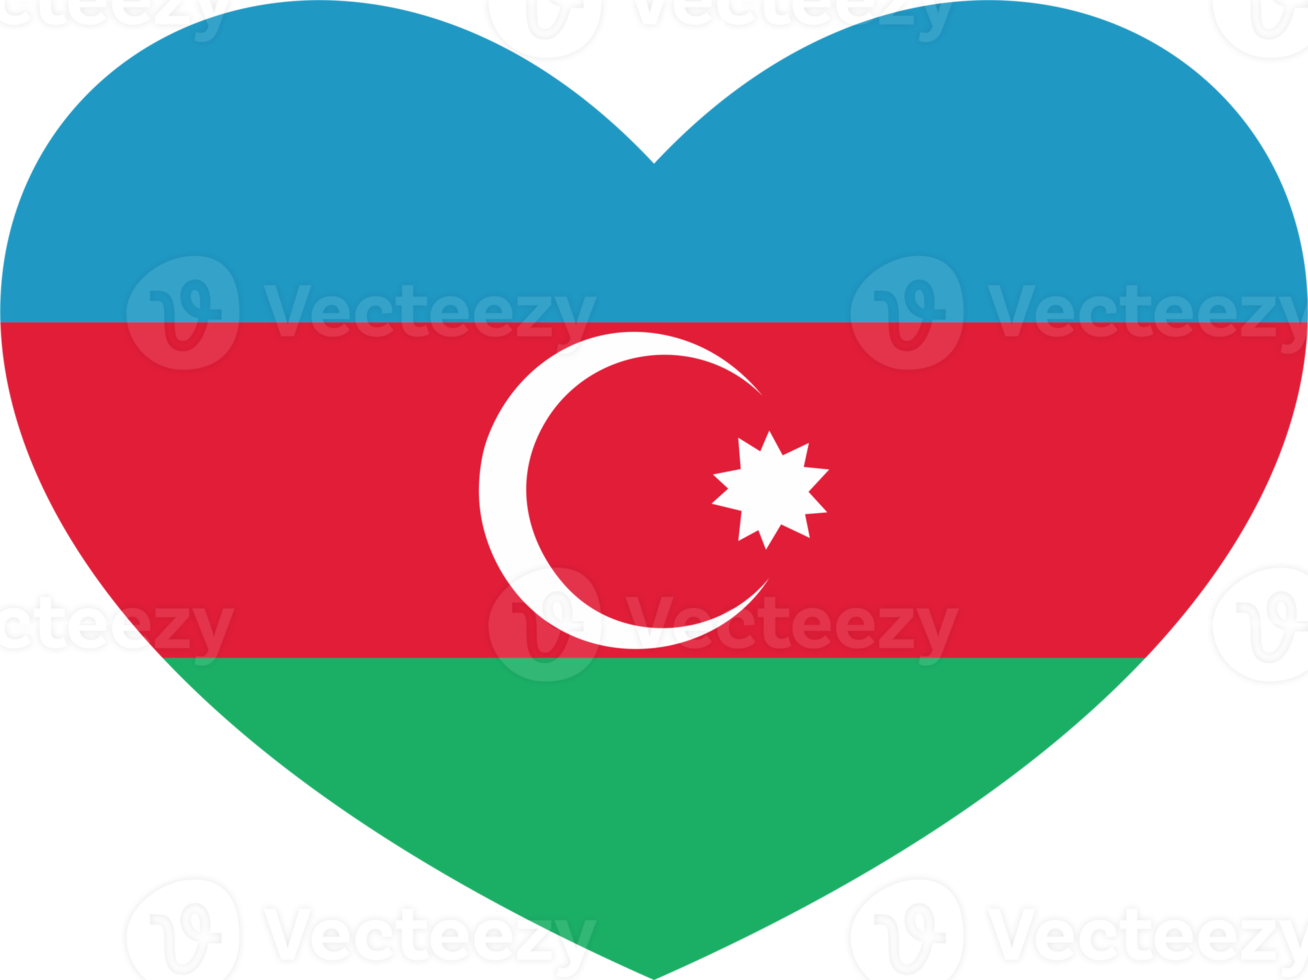 azerbaijan flagga hjärta form png